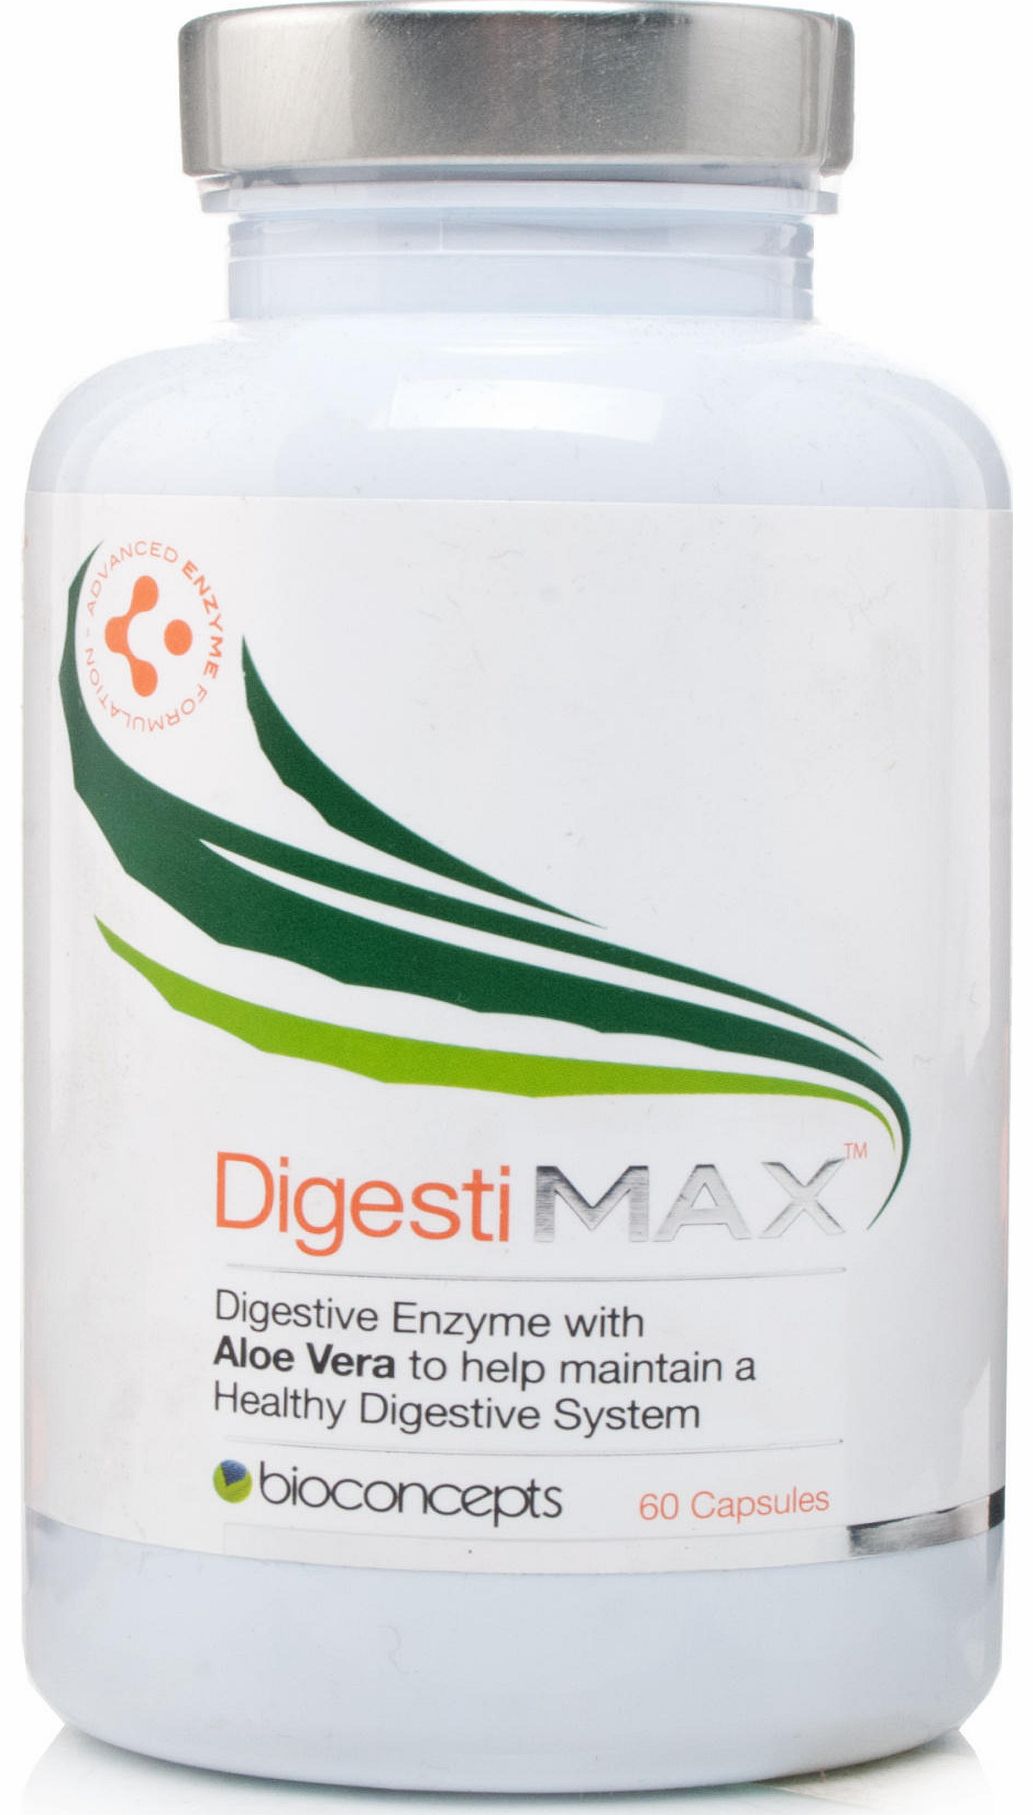 Bioconcepts DigestiMAX with Aloe Vera